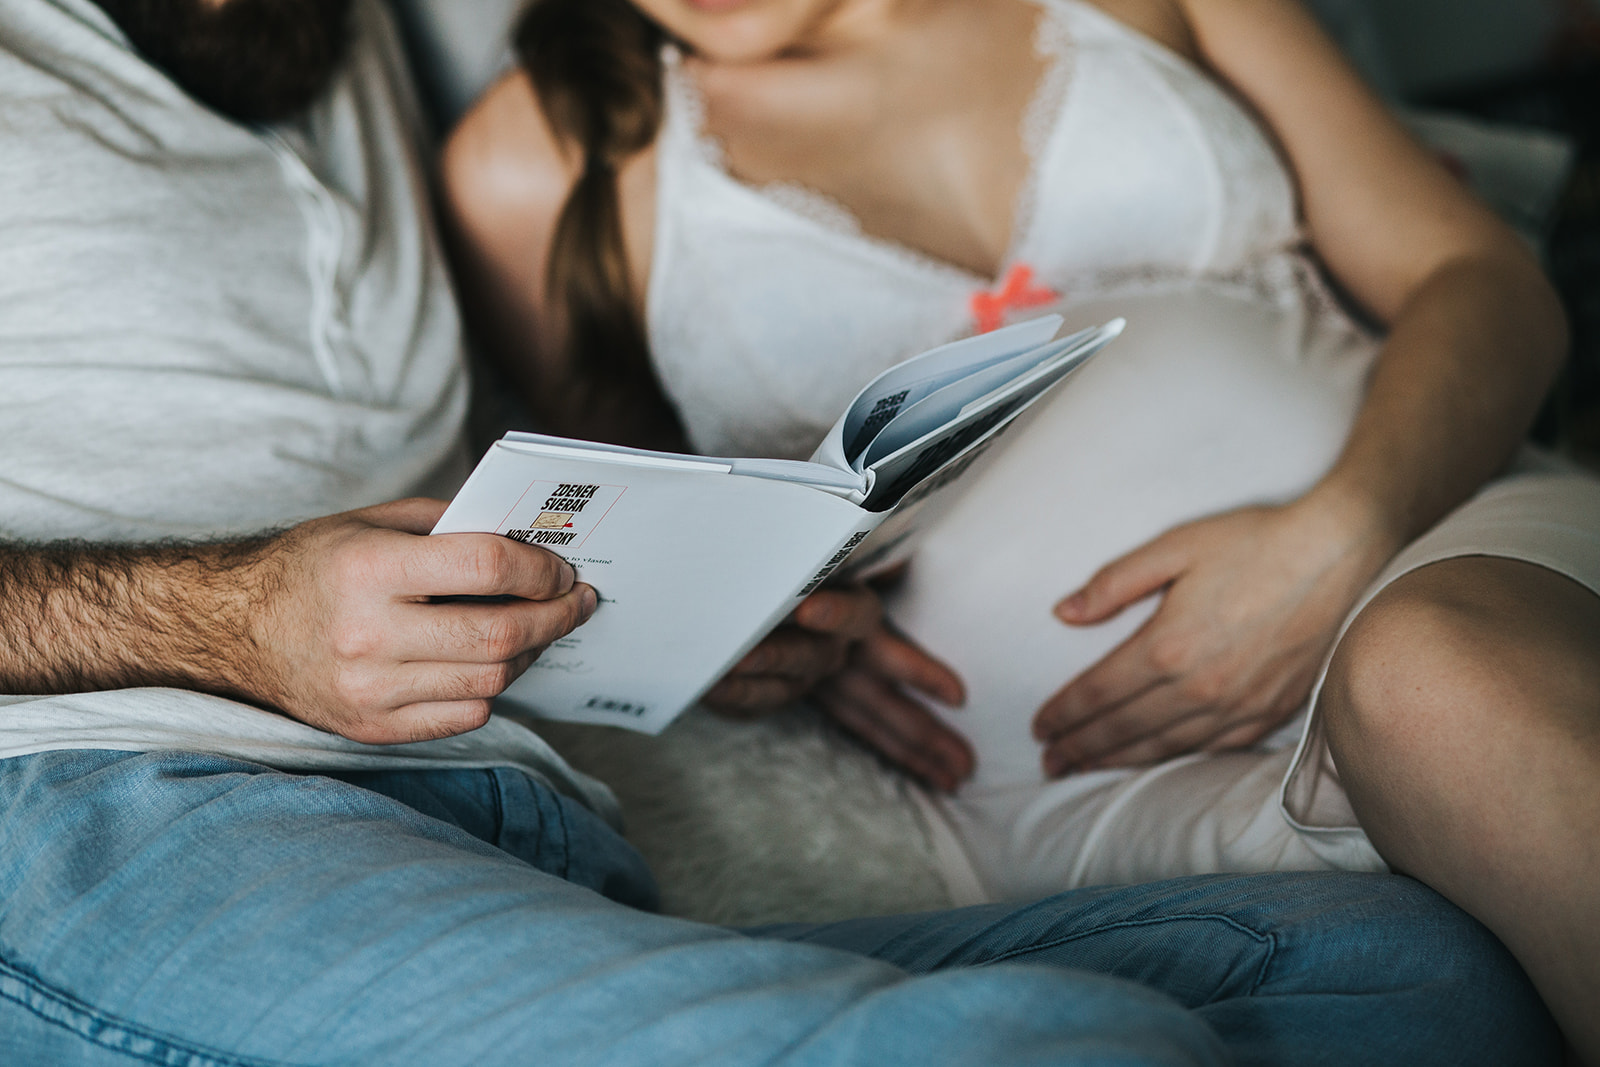 Calgary Maternity Photographer- Capturing the Joy of Expecting Parents